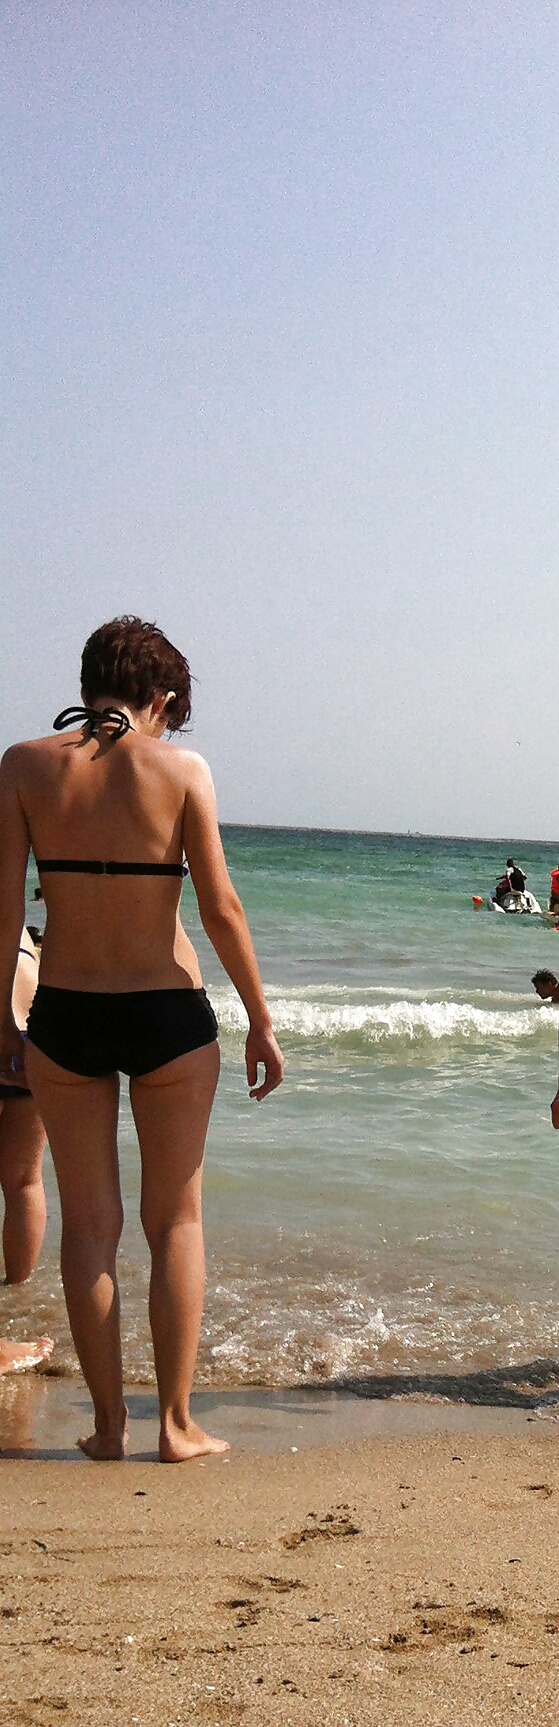 Spy summer beach sexy teens romanian #40070858